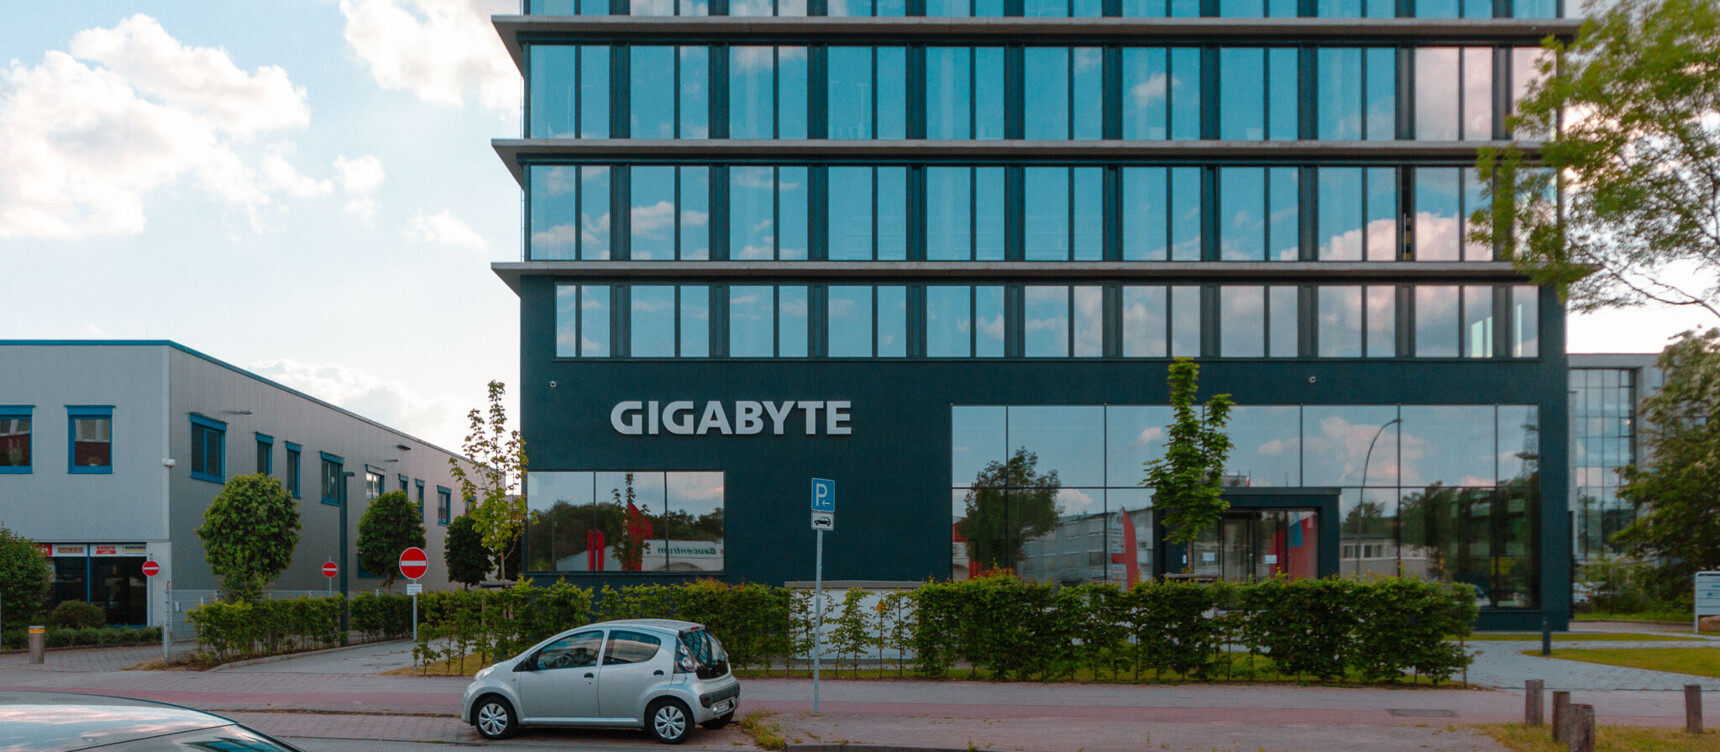 Gigabyte European headquarters in the industrial area Frierdich-Ebert-Damm 